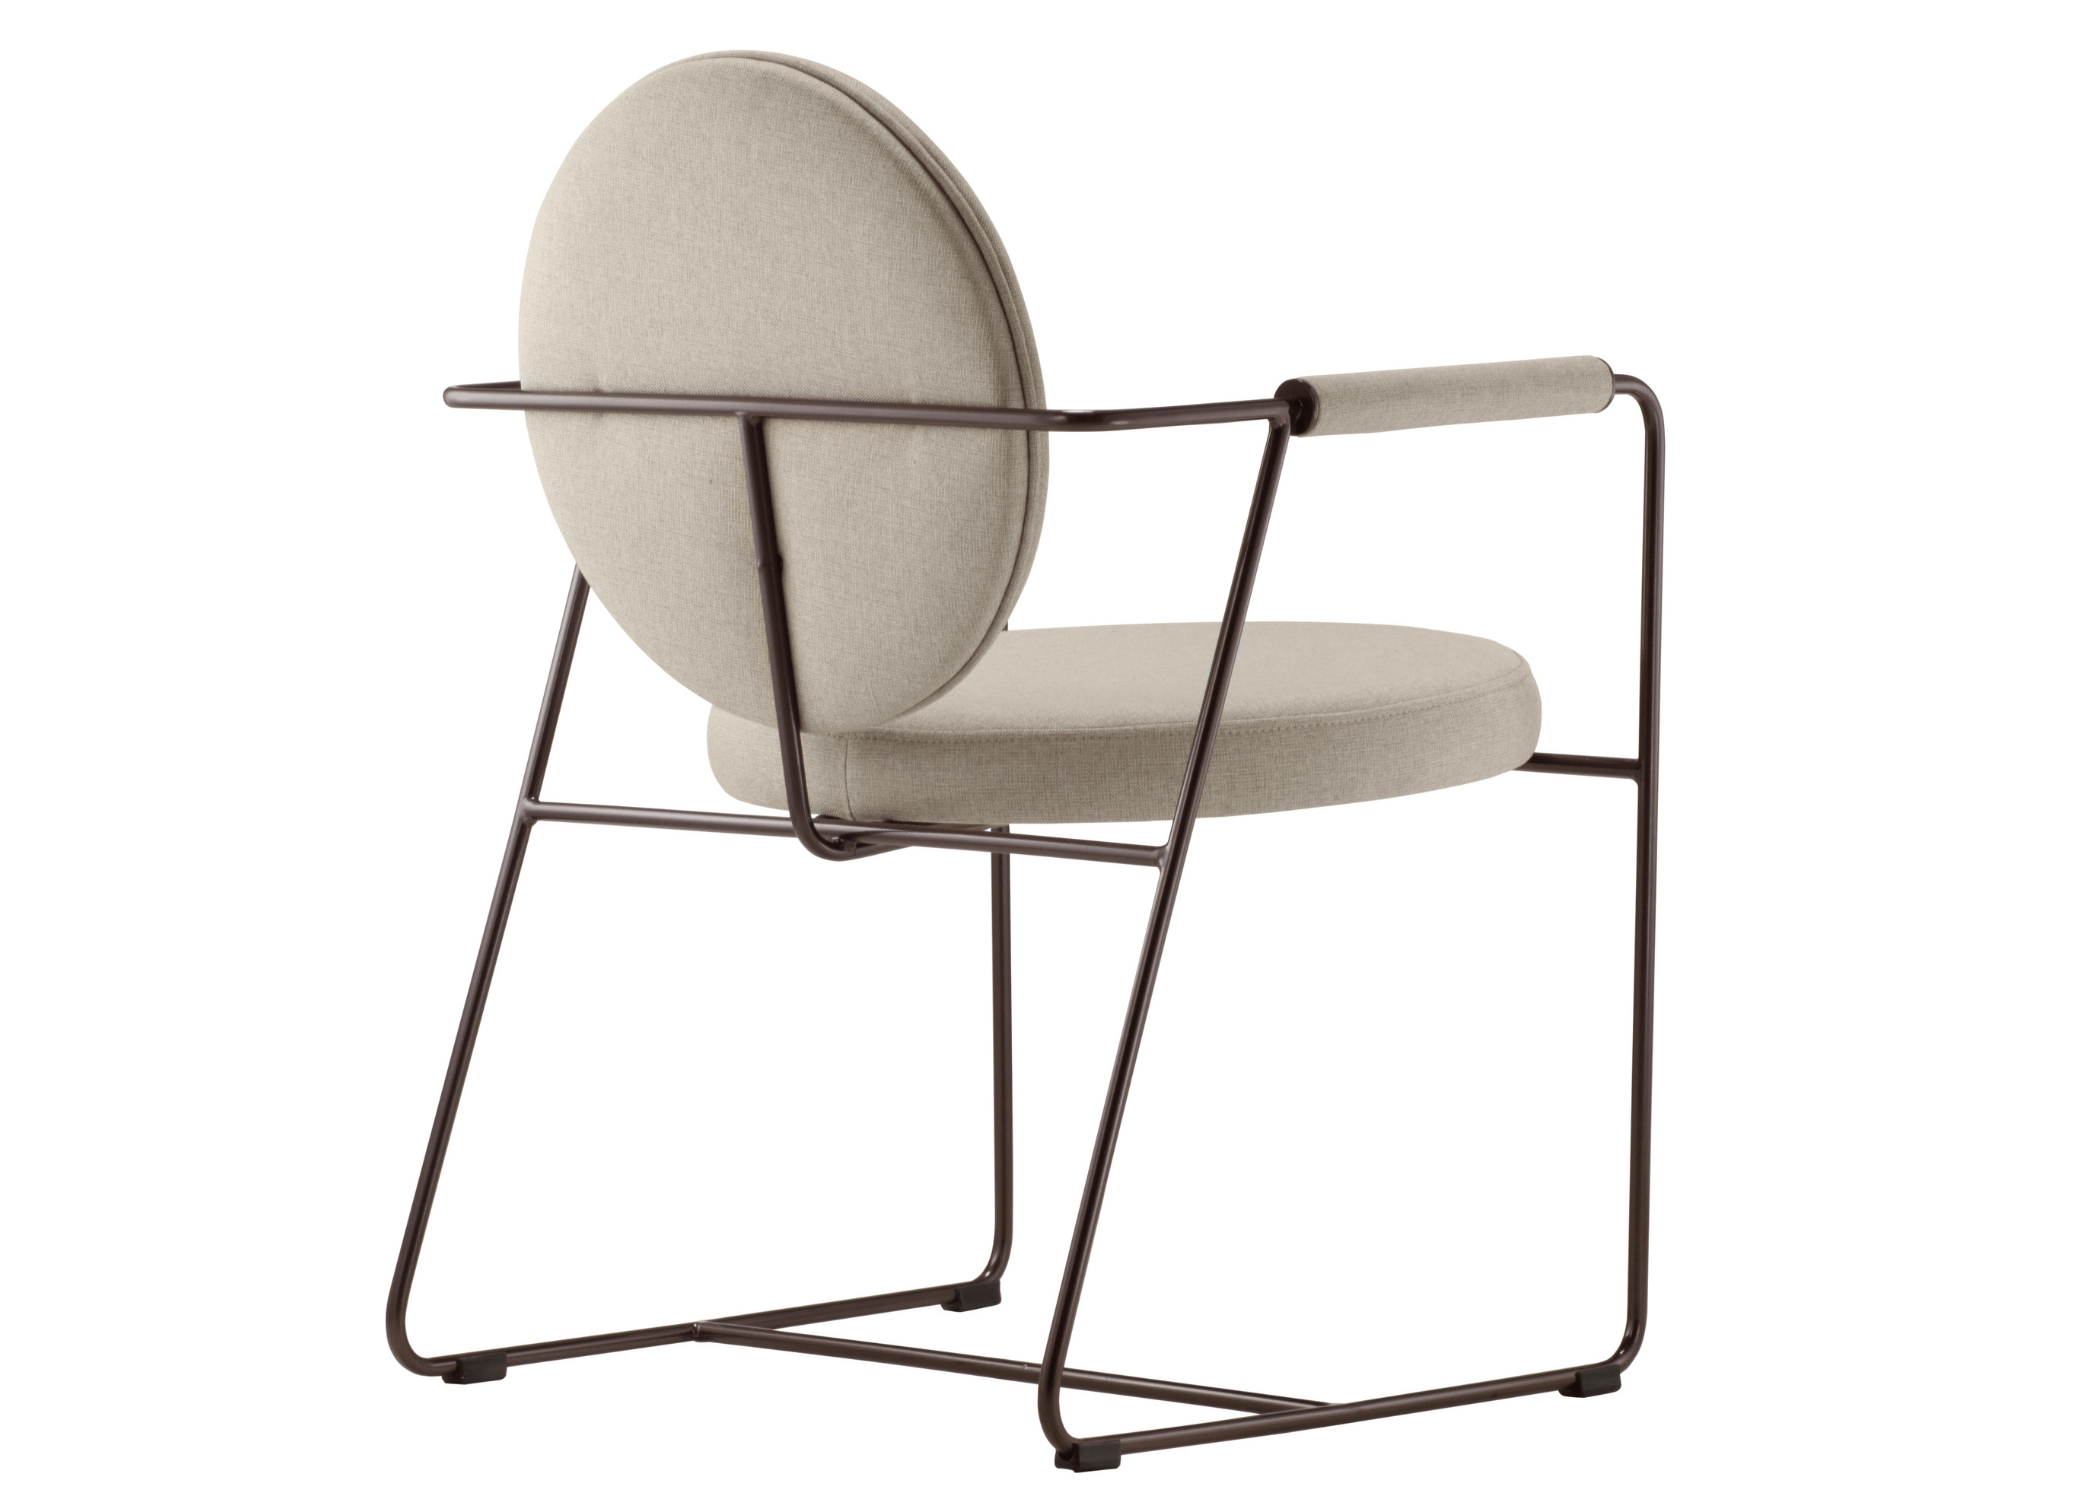 Minimalismo elegante: Cadeira Sessy para ambientes contemporâneos.